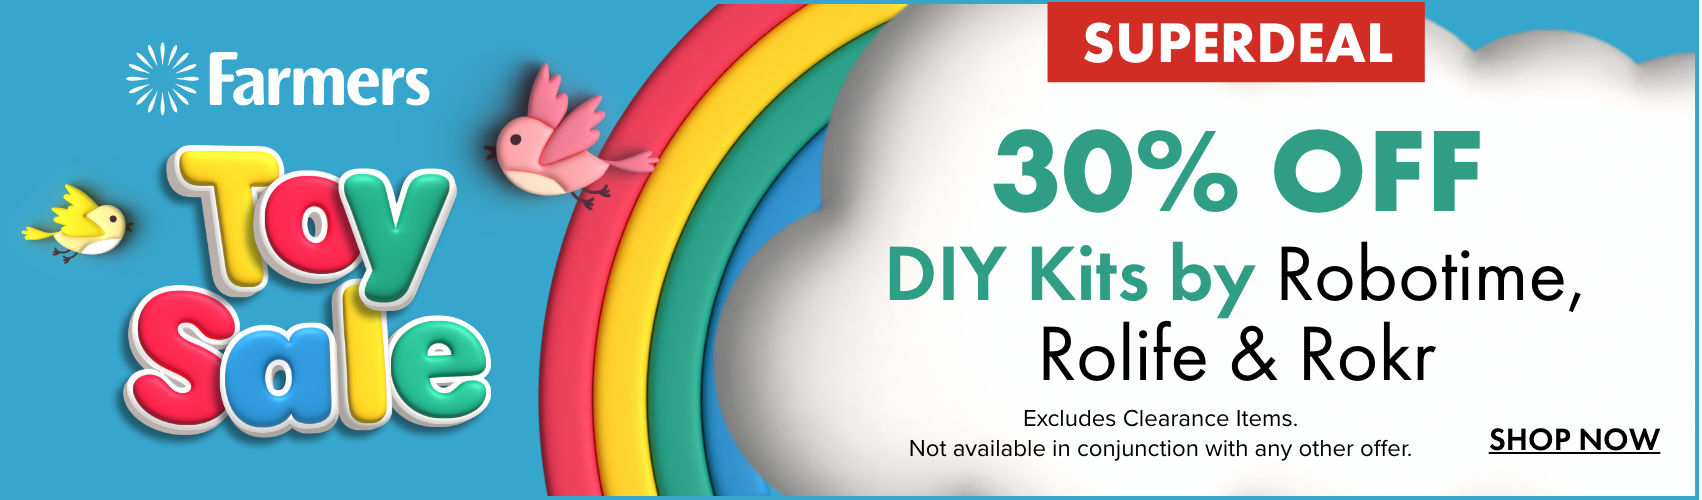 30% OFF DIY Kits by Robotime, Rolife & Rokr